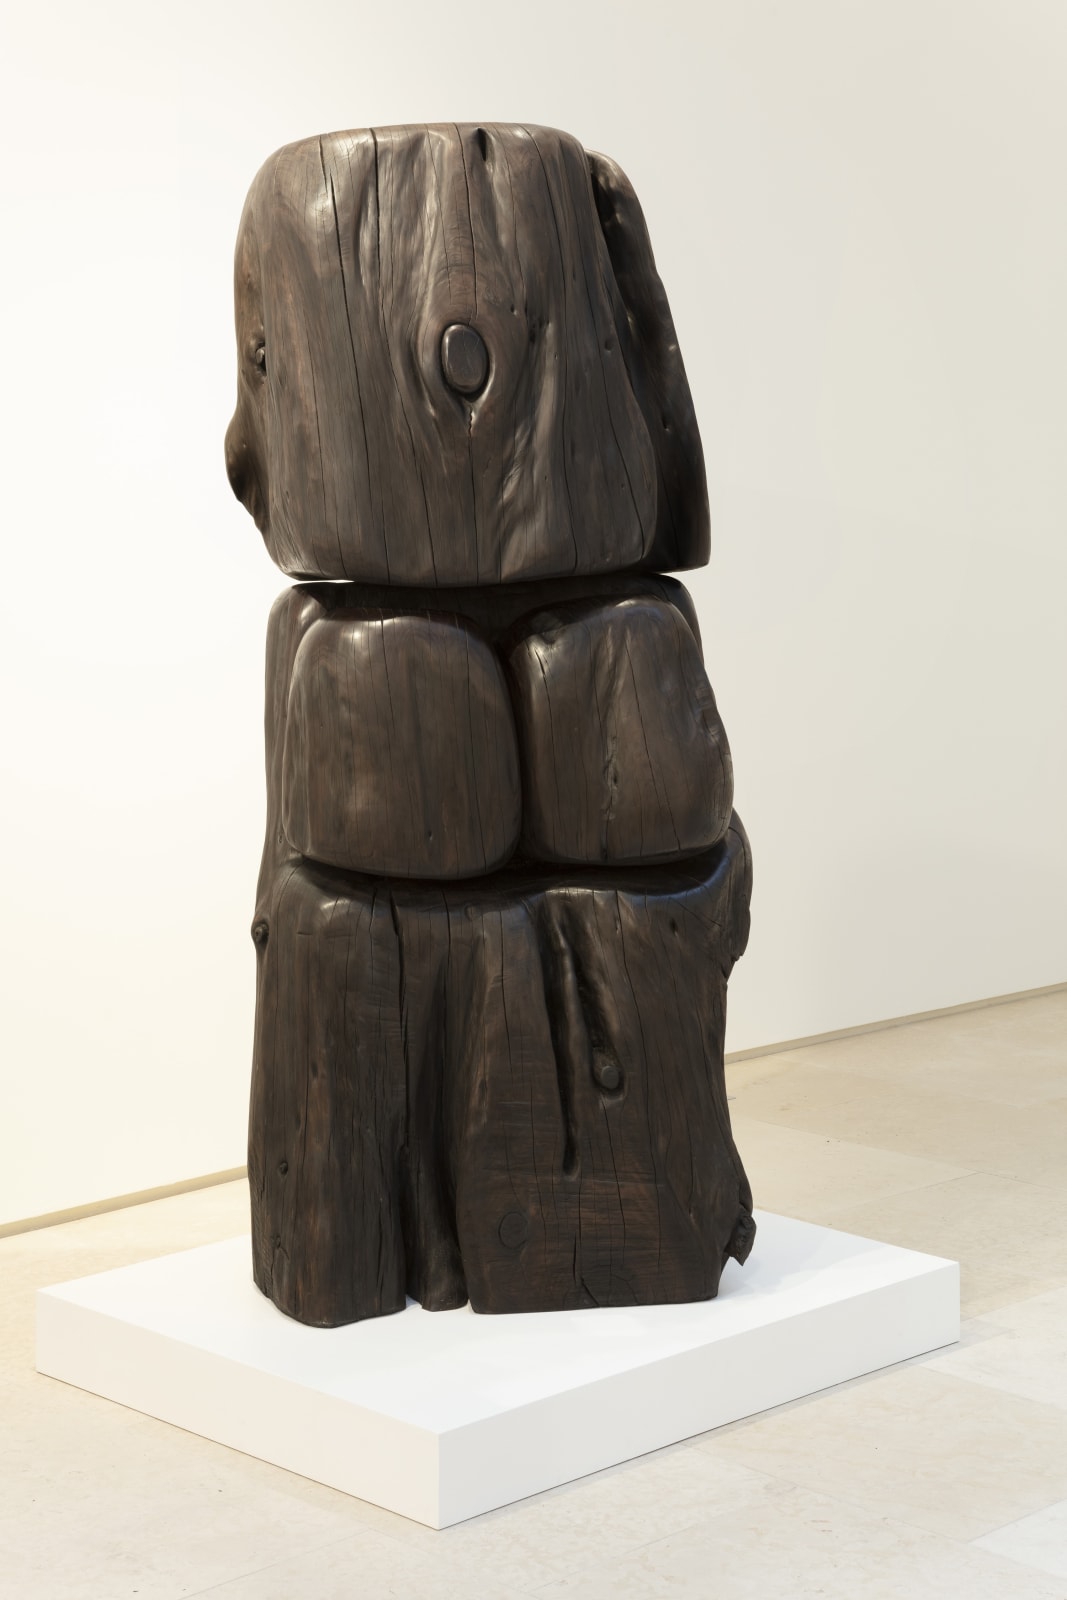 Keping Wang Femme cyclope, 2019 Wood carving / Cypress 193 x 90 x 70 cm